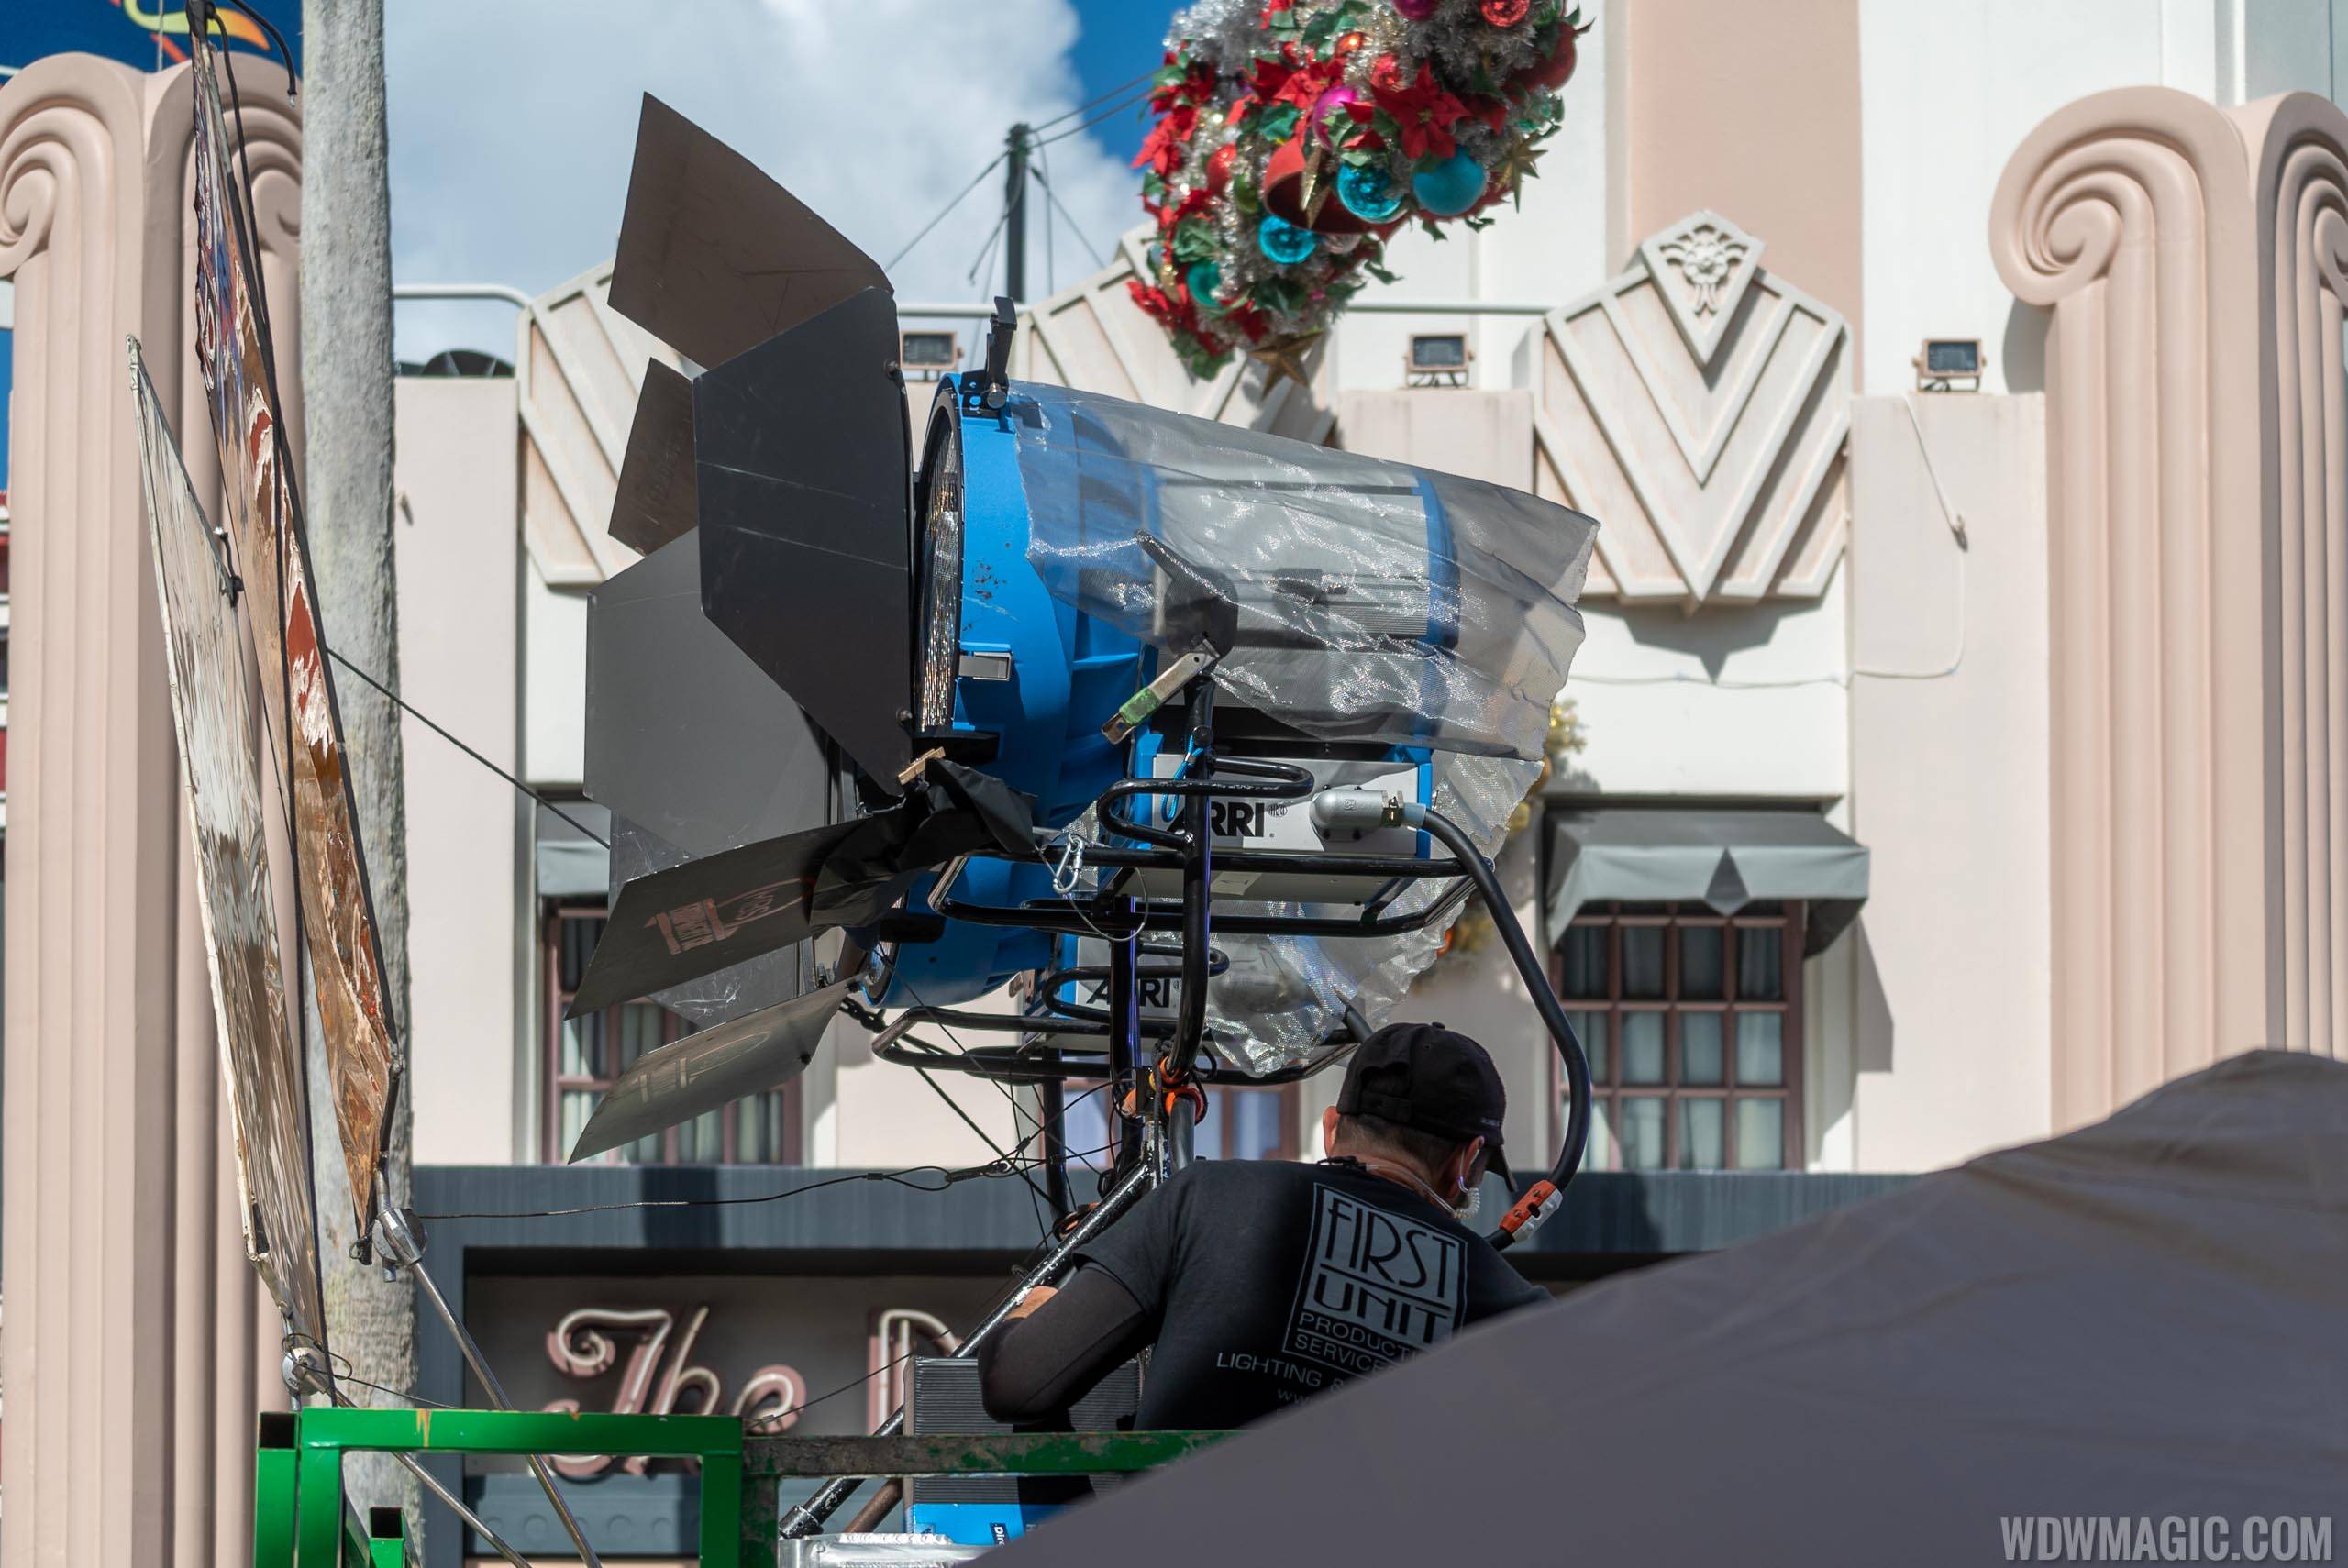 ABC Holiday Specials filming at Disney's Hollywood Studios 2019